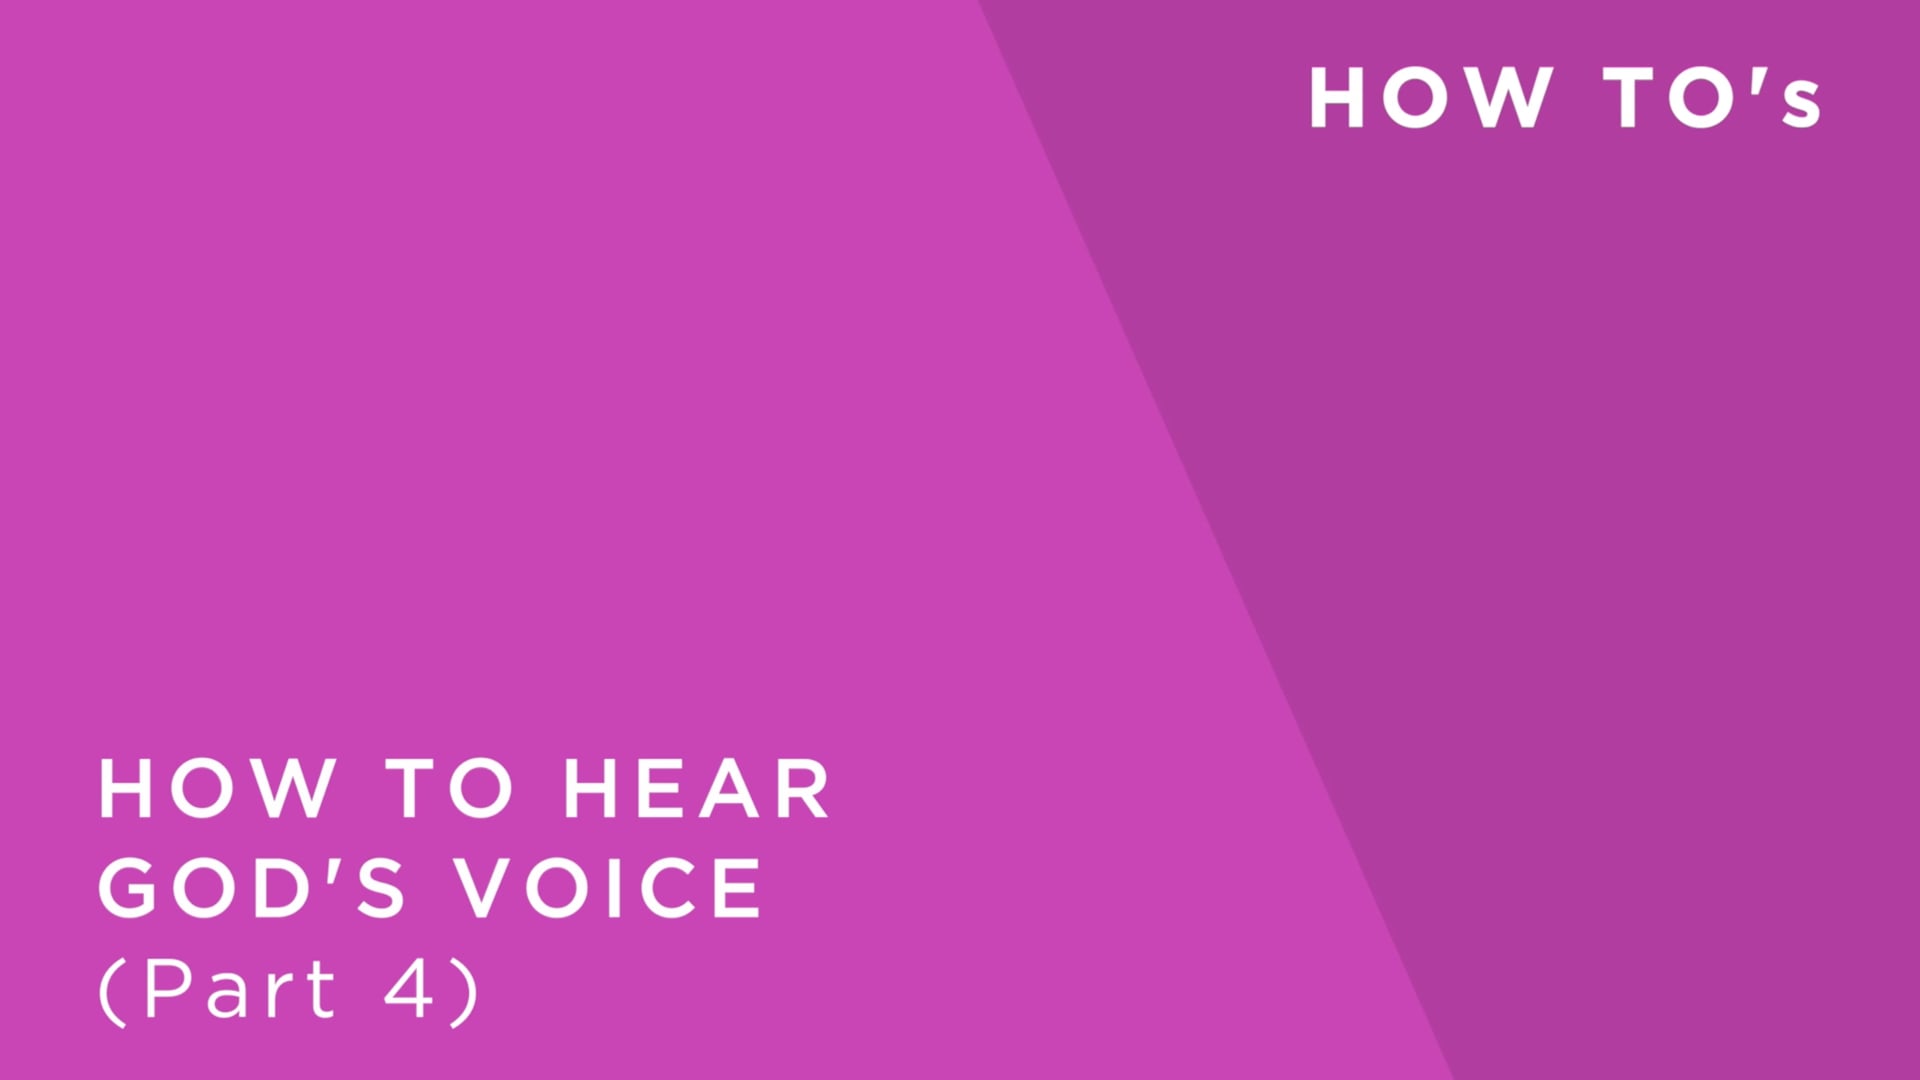 How to hear God's voice